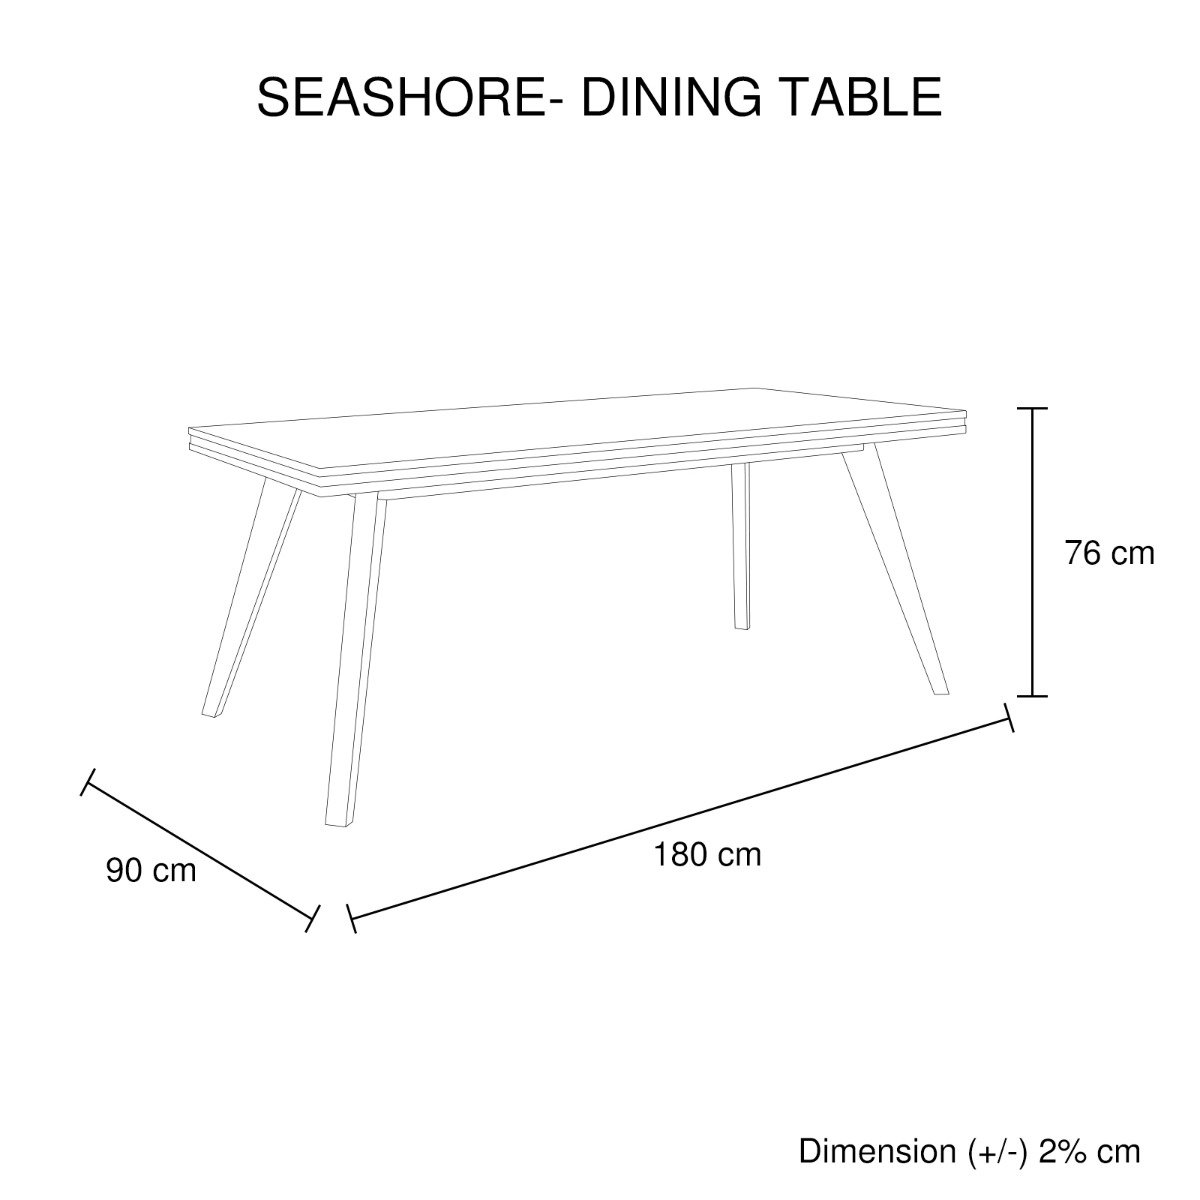 Dining Seashore Dining Table 180cm